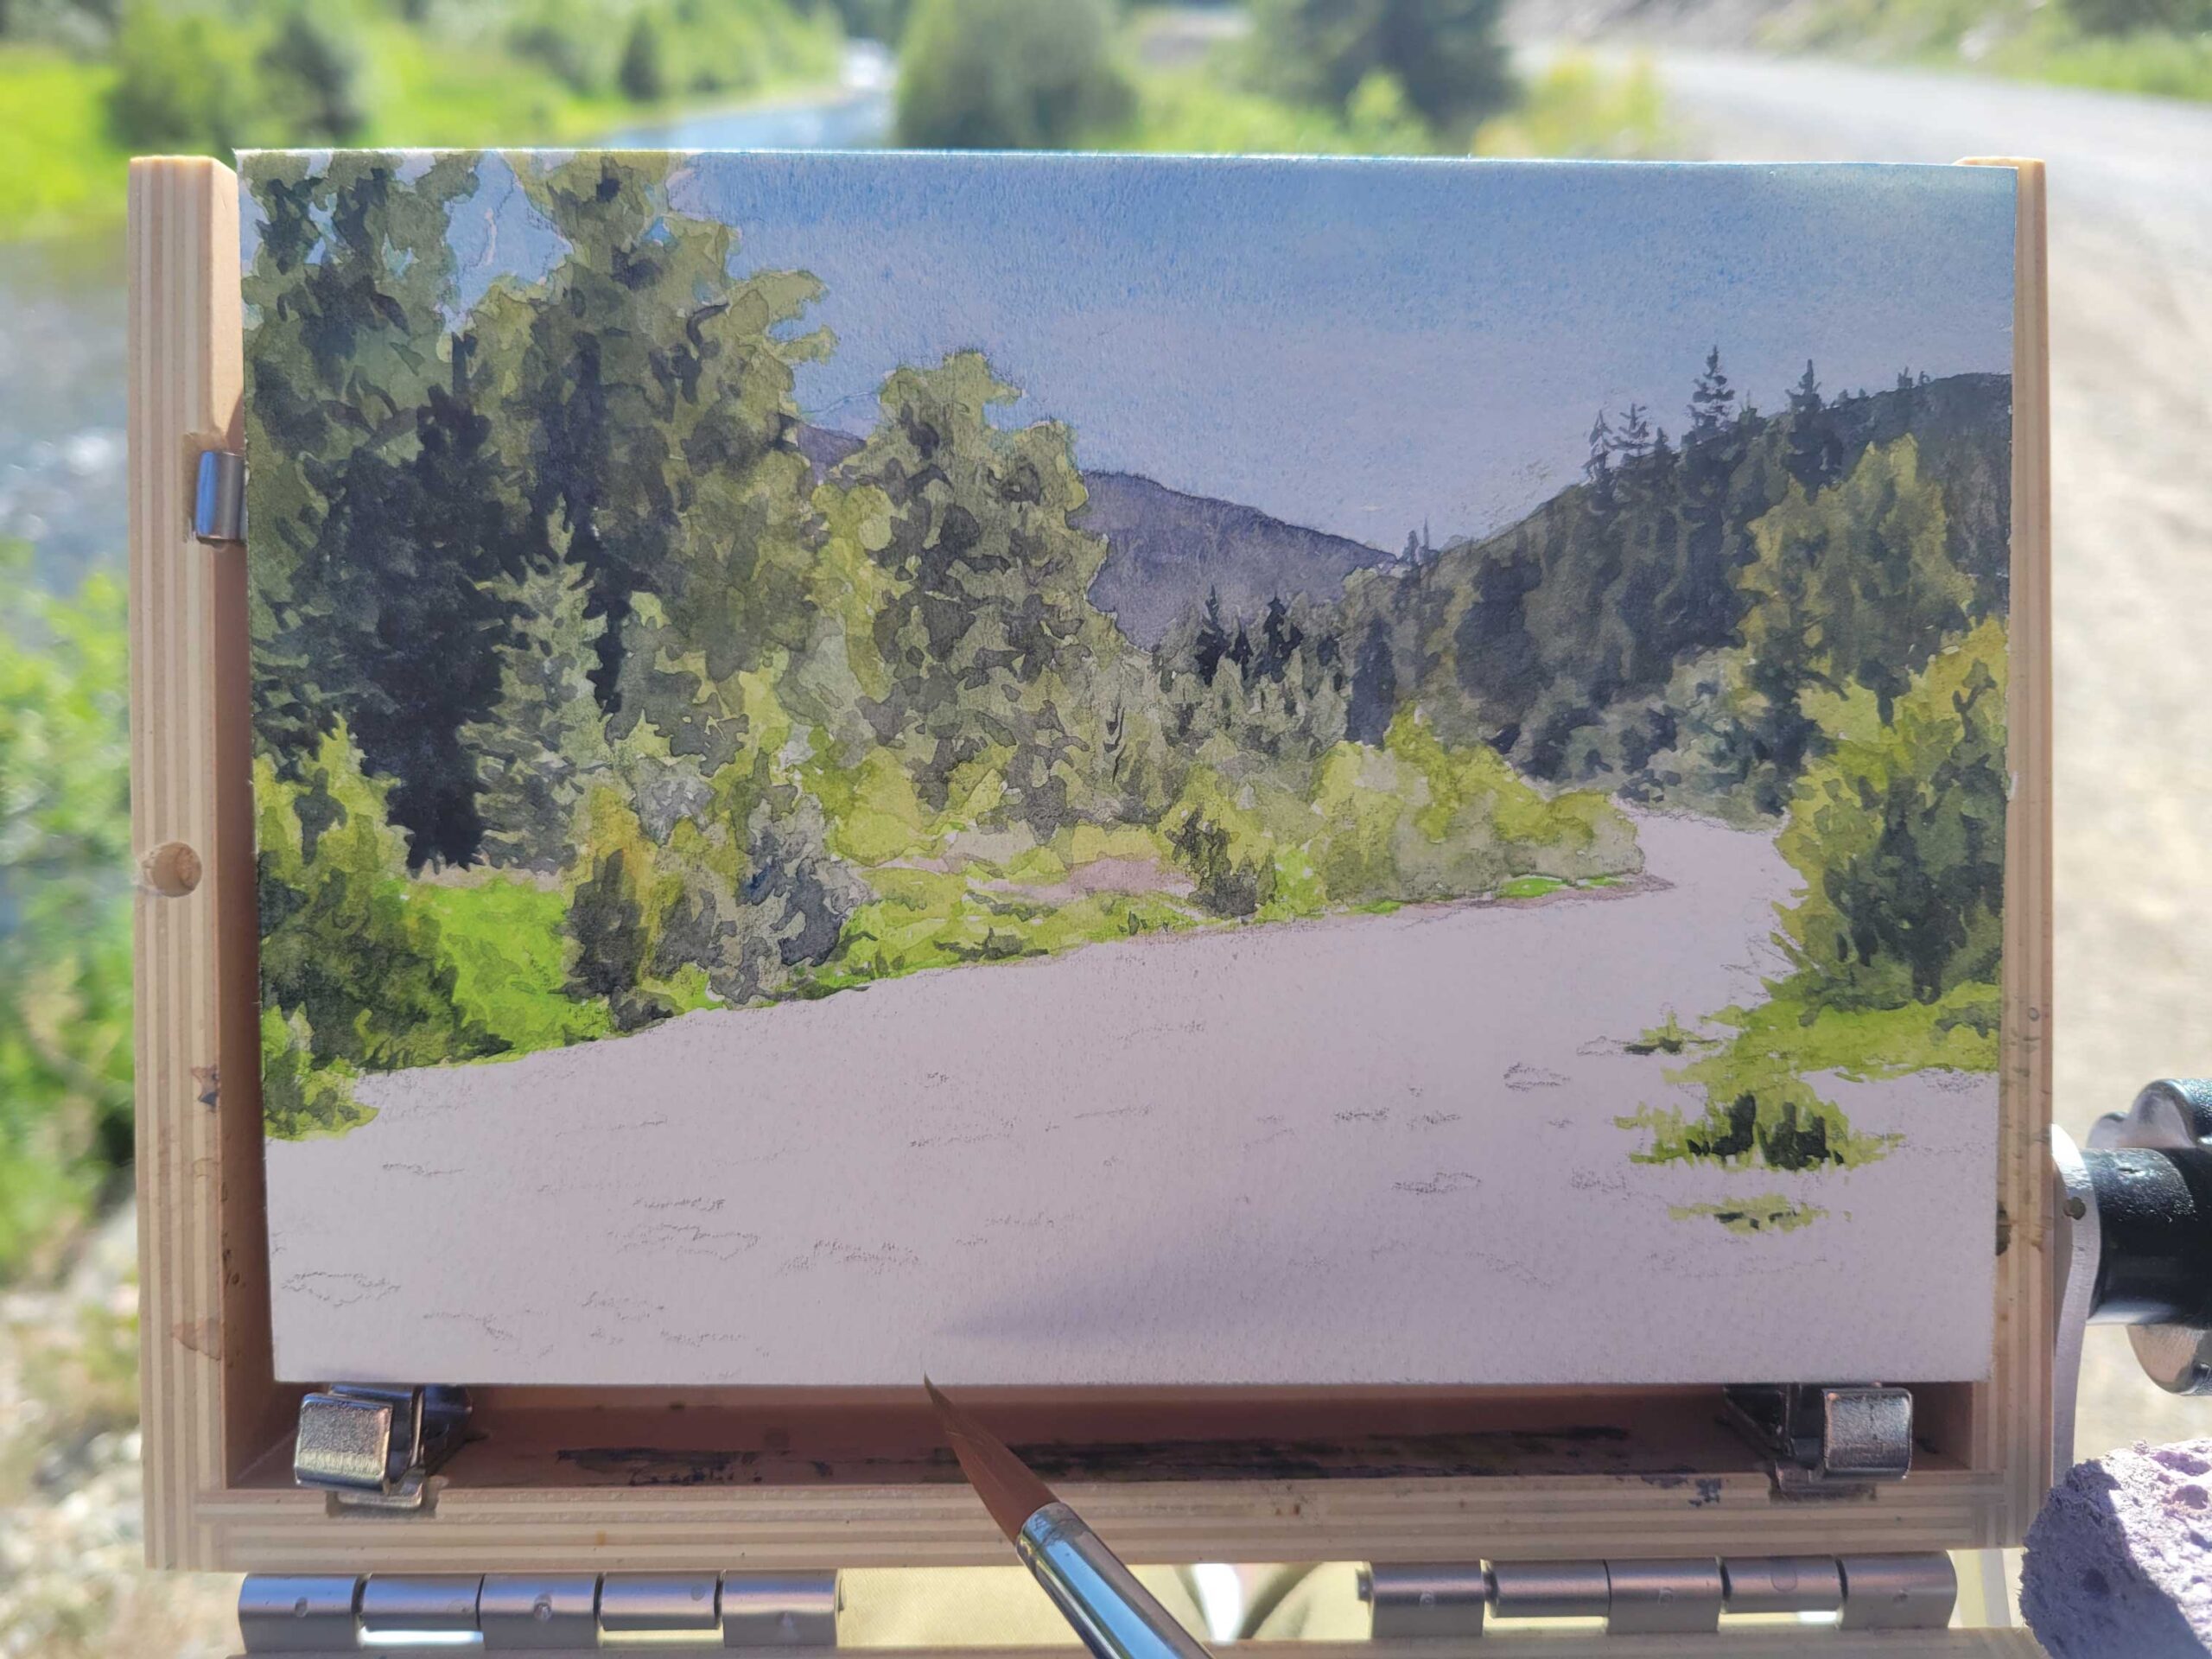 How to paint a landscape demo